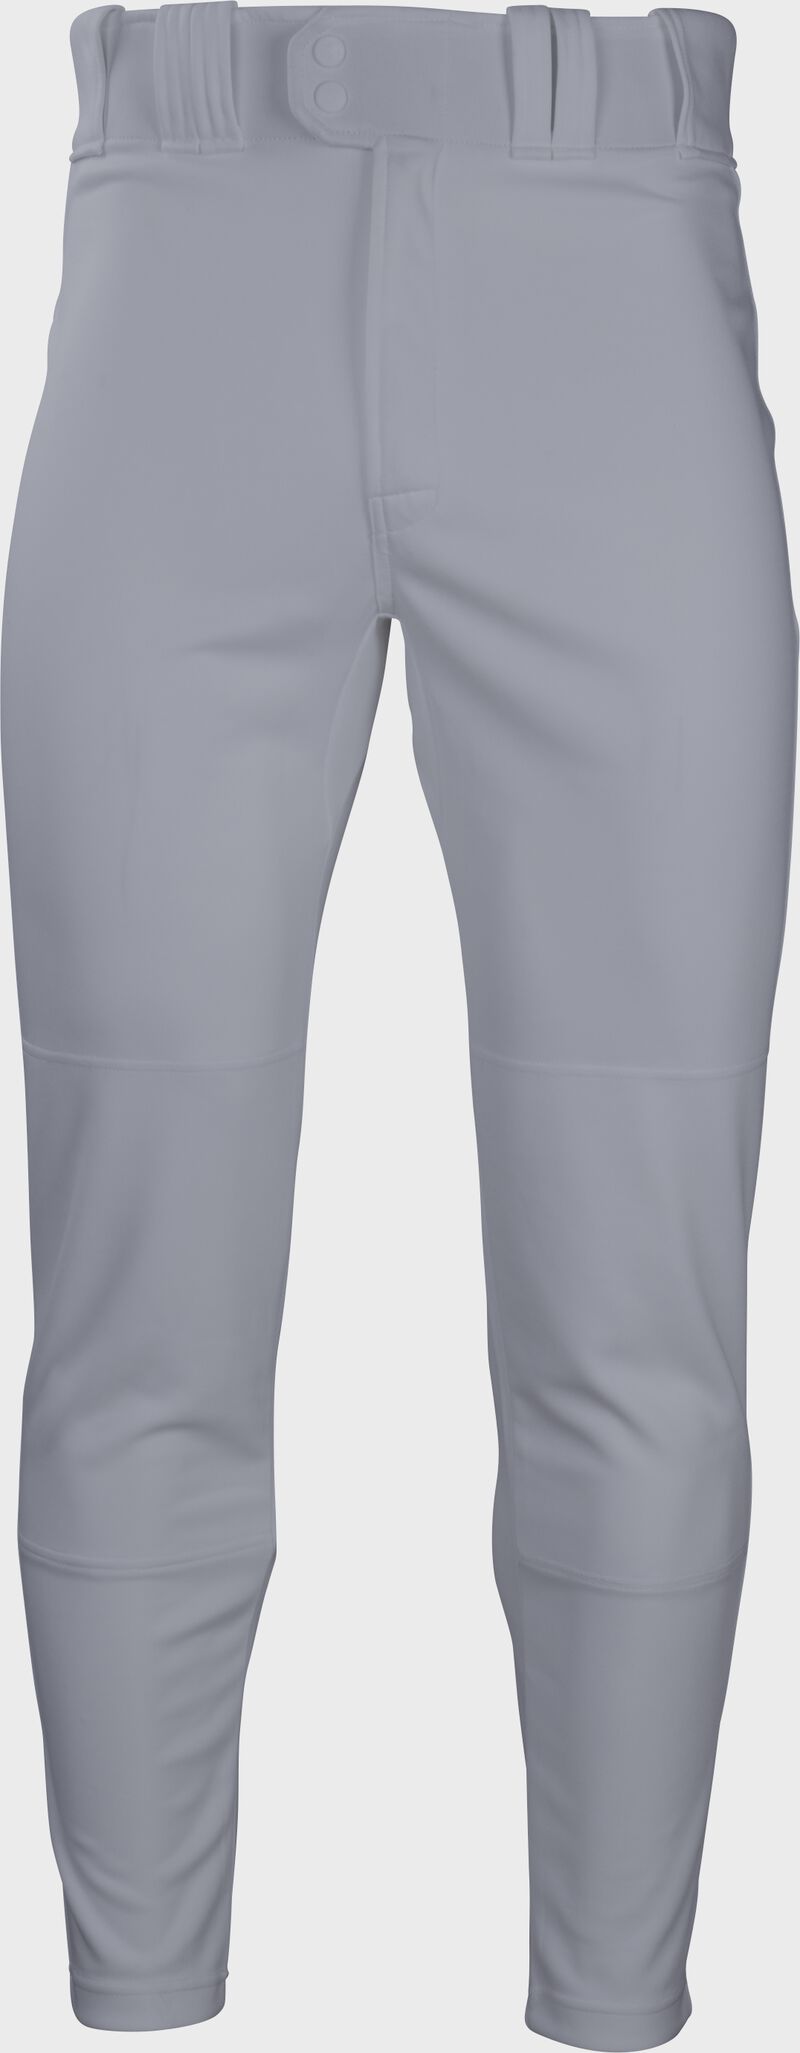 A blue gray pair of Rawlings 150 jogger baseball pants - SKU: PROJGS-BG loading=